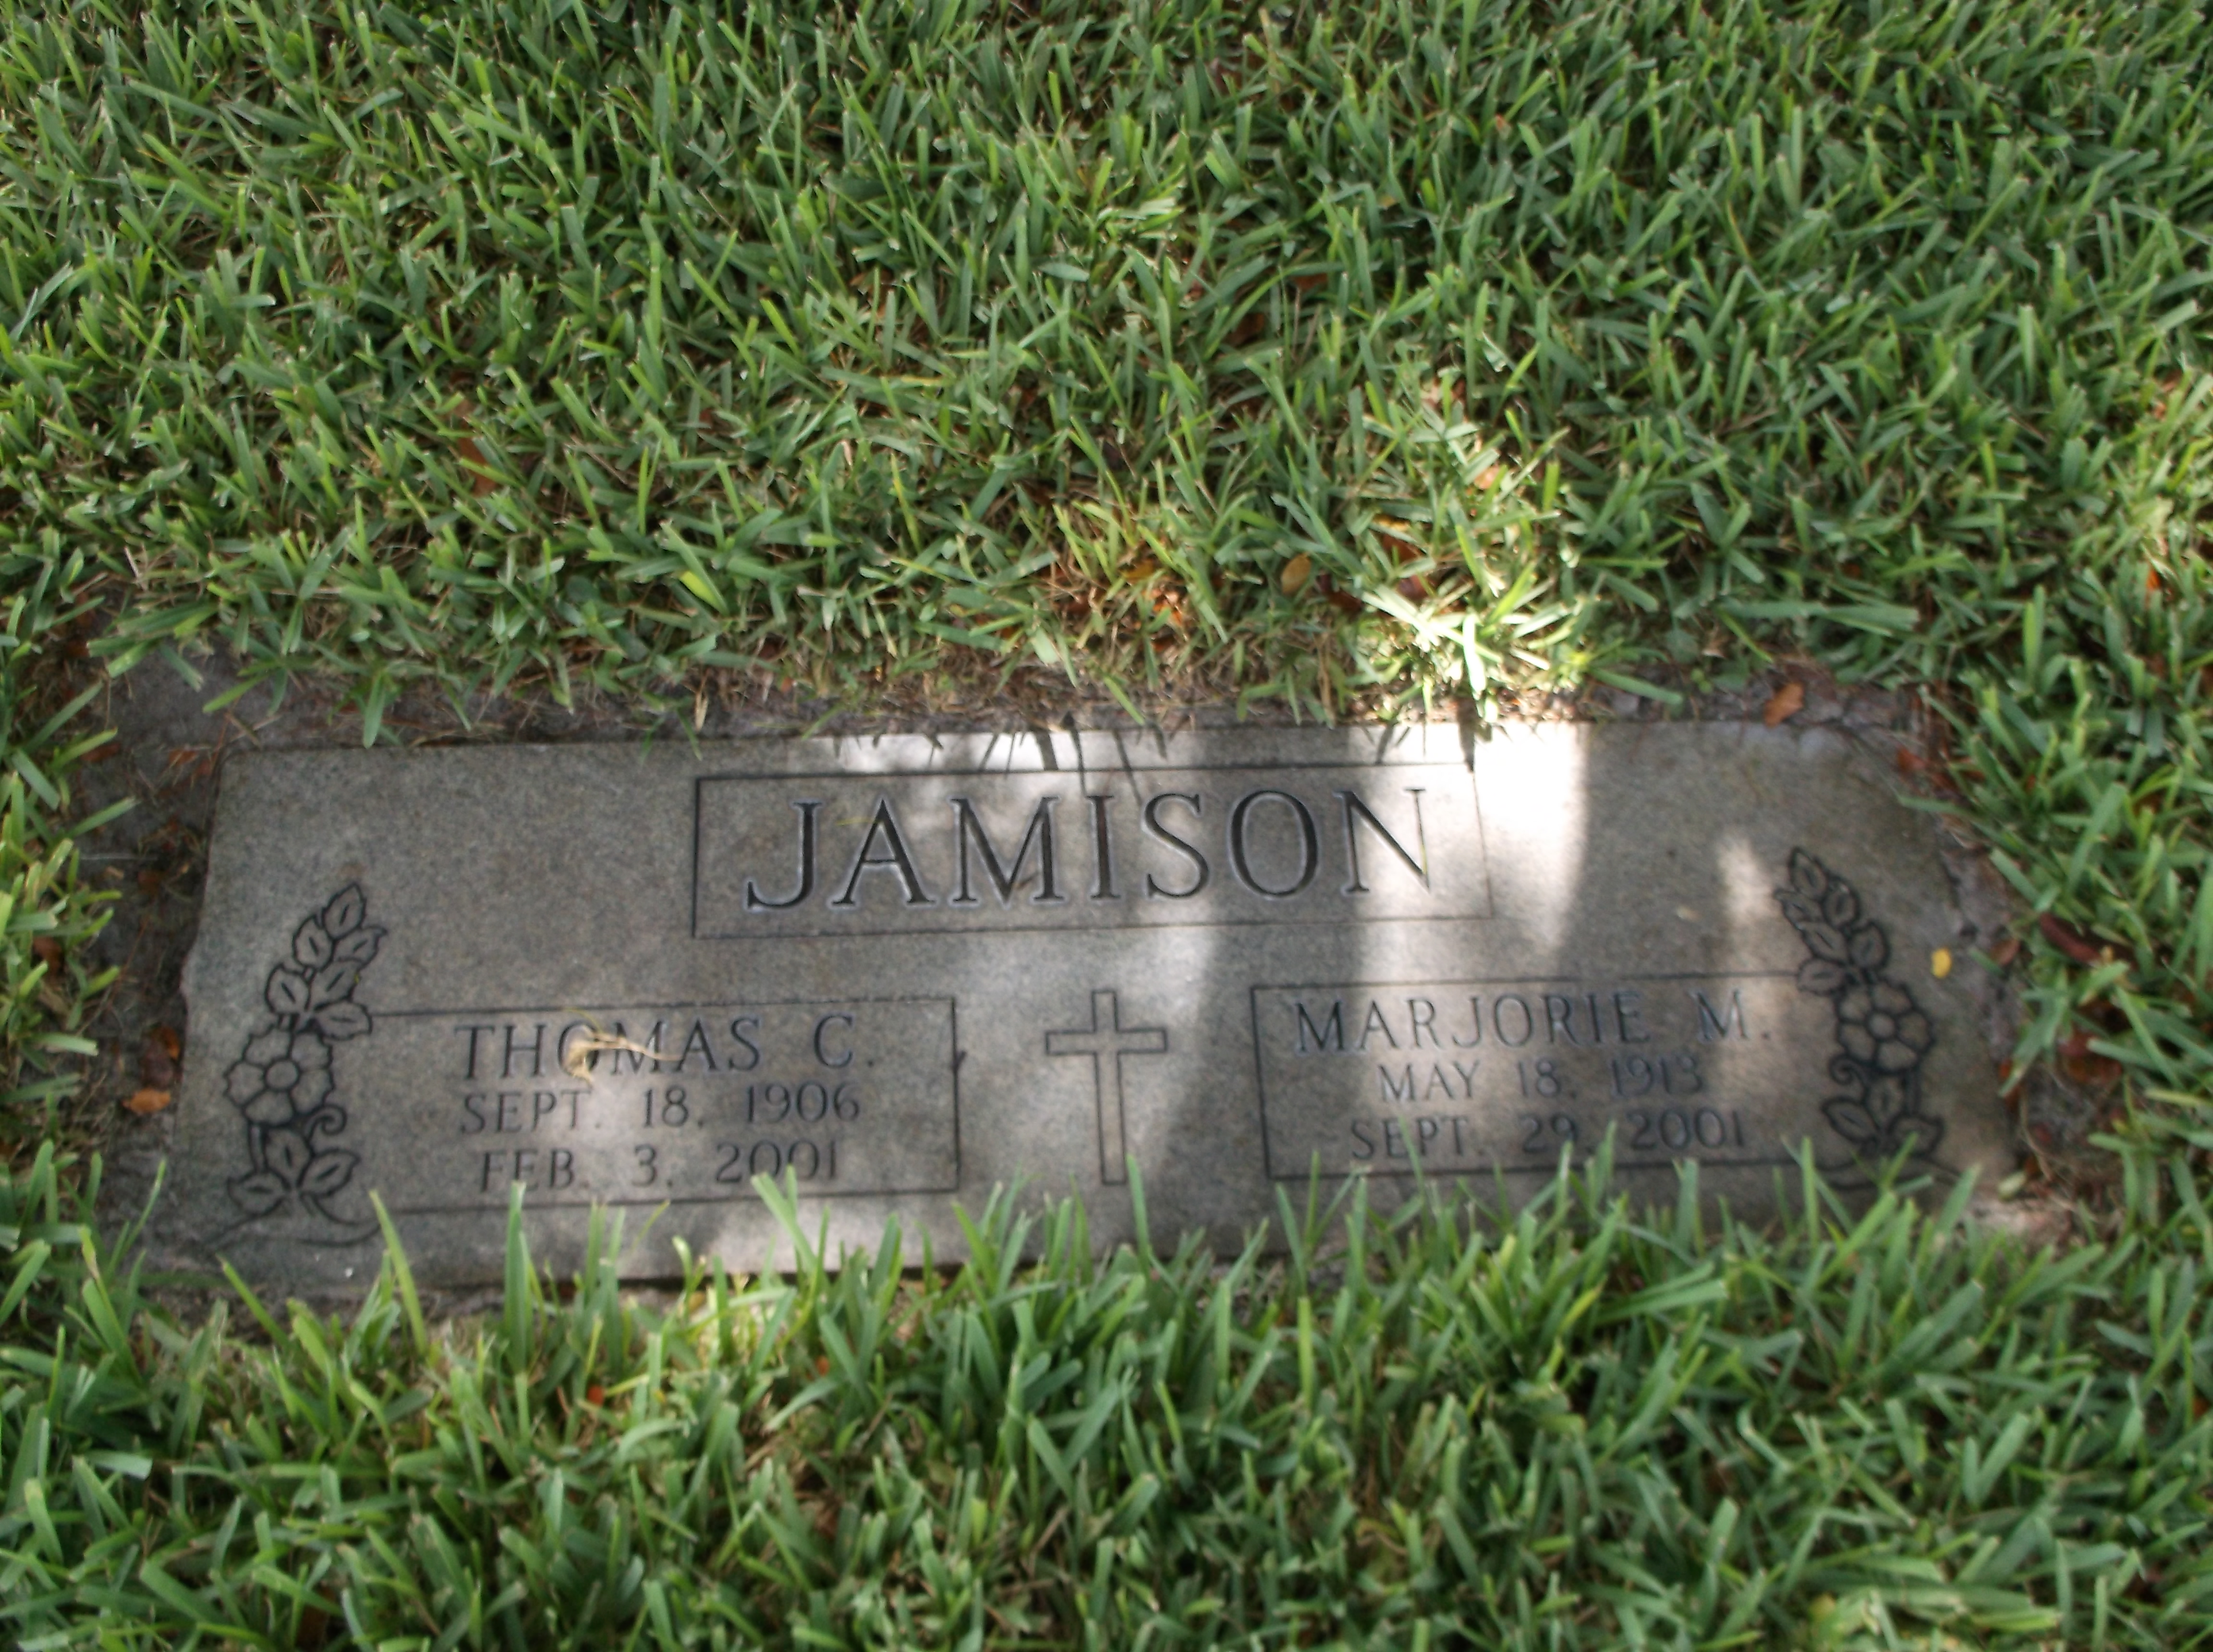 Thomas C Jamison